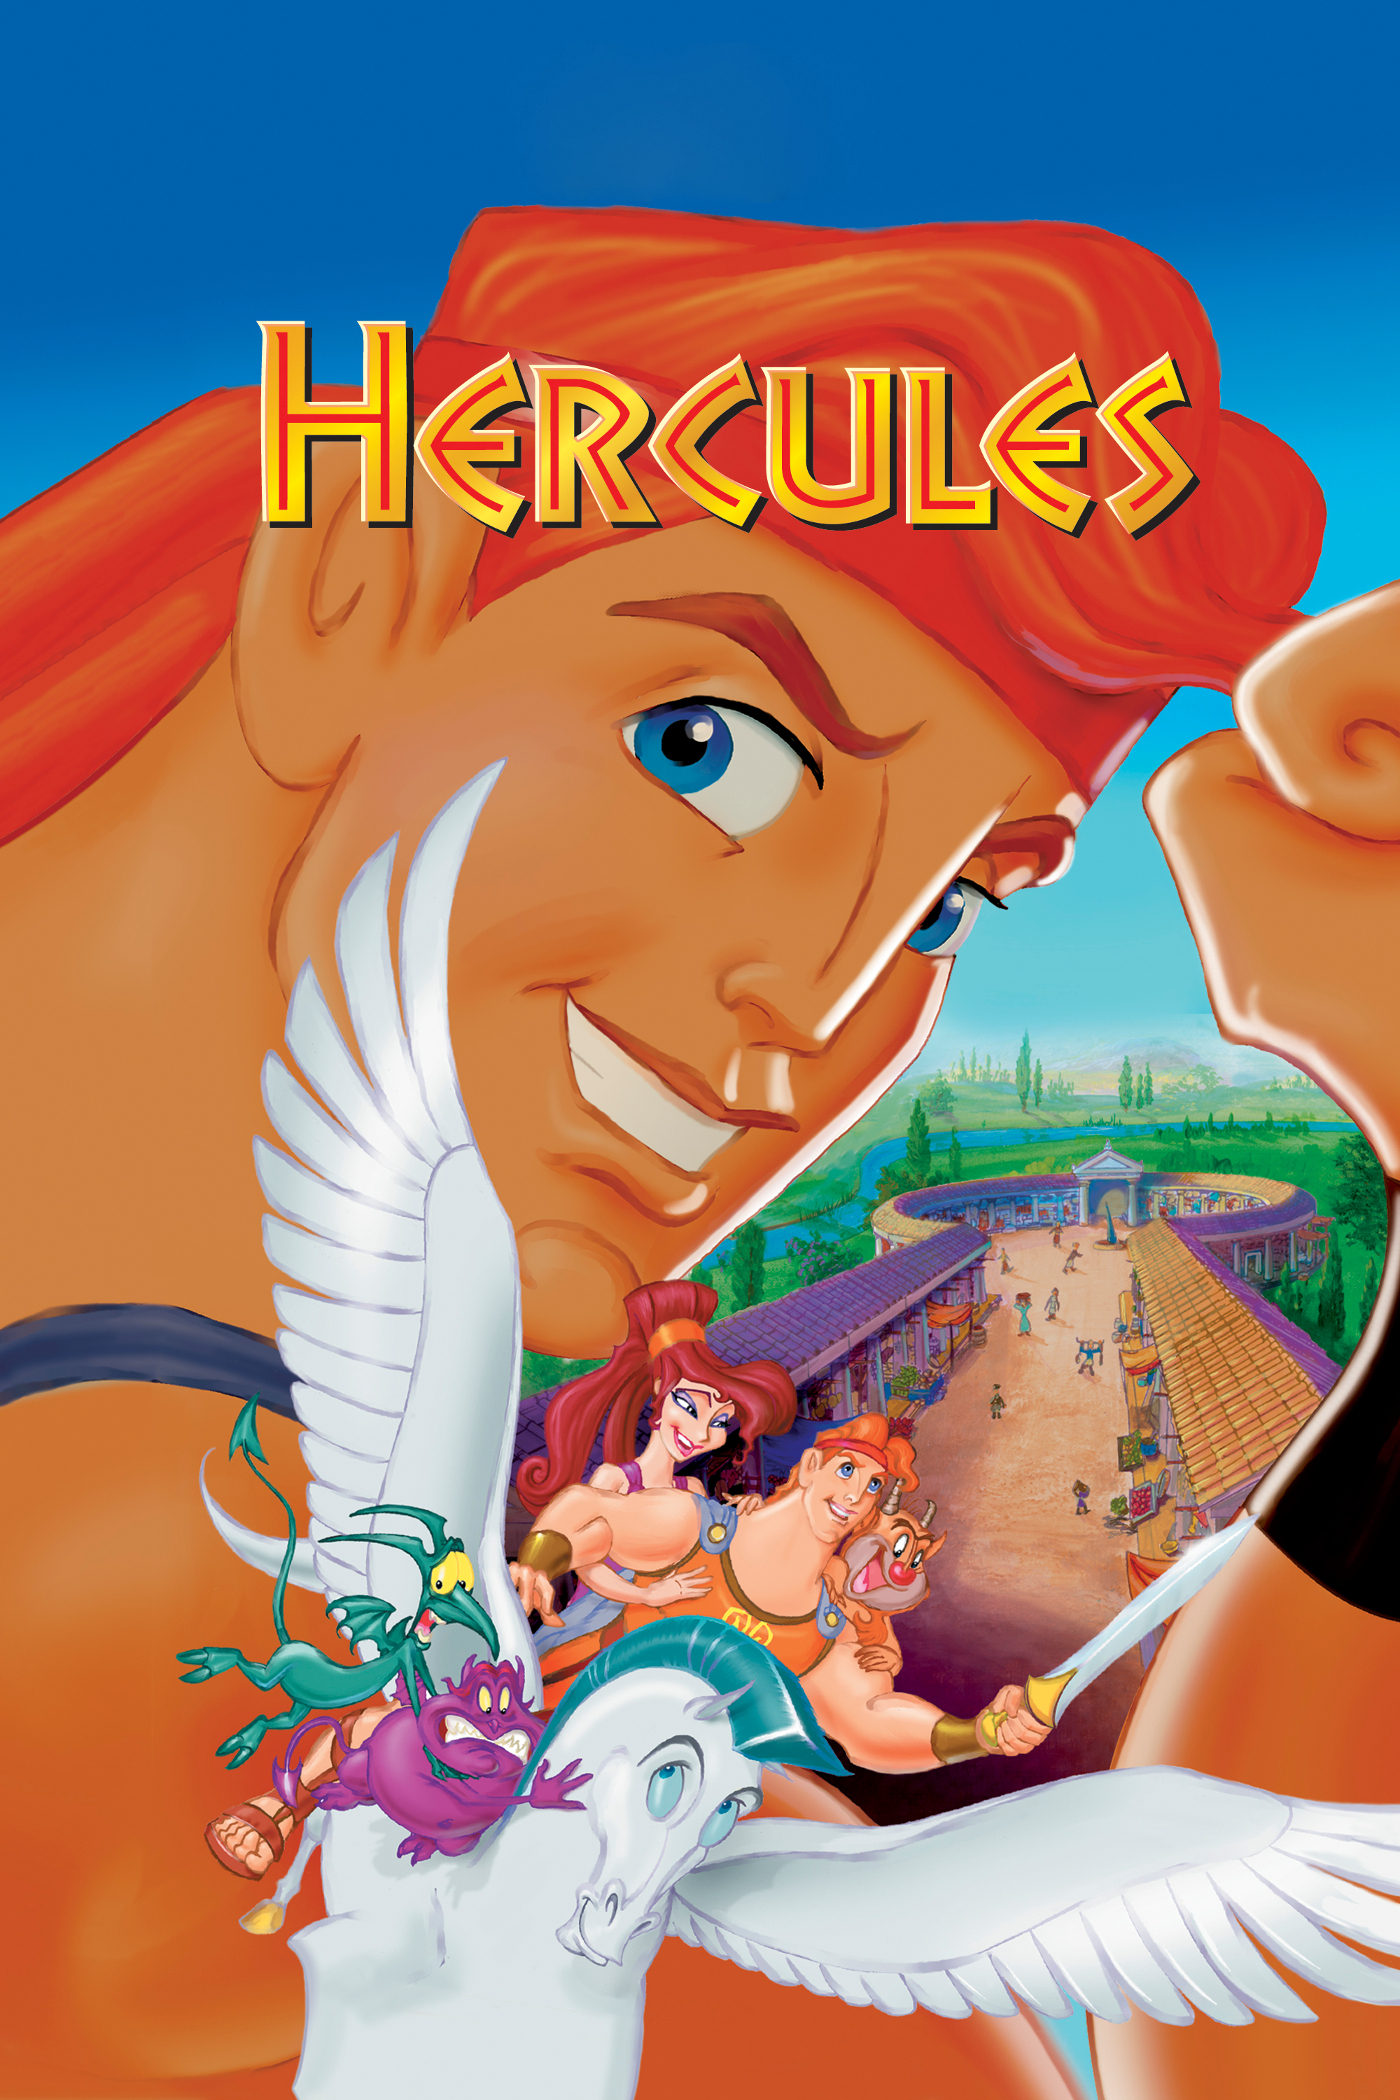 Plakat von "Hercules"